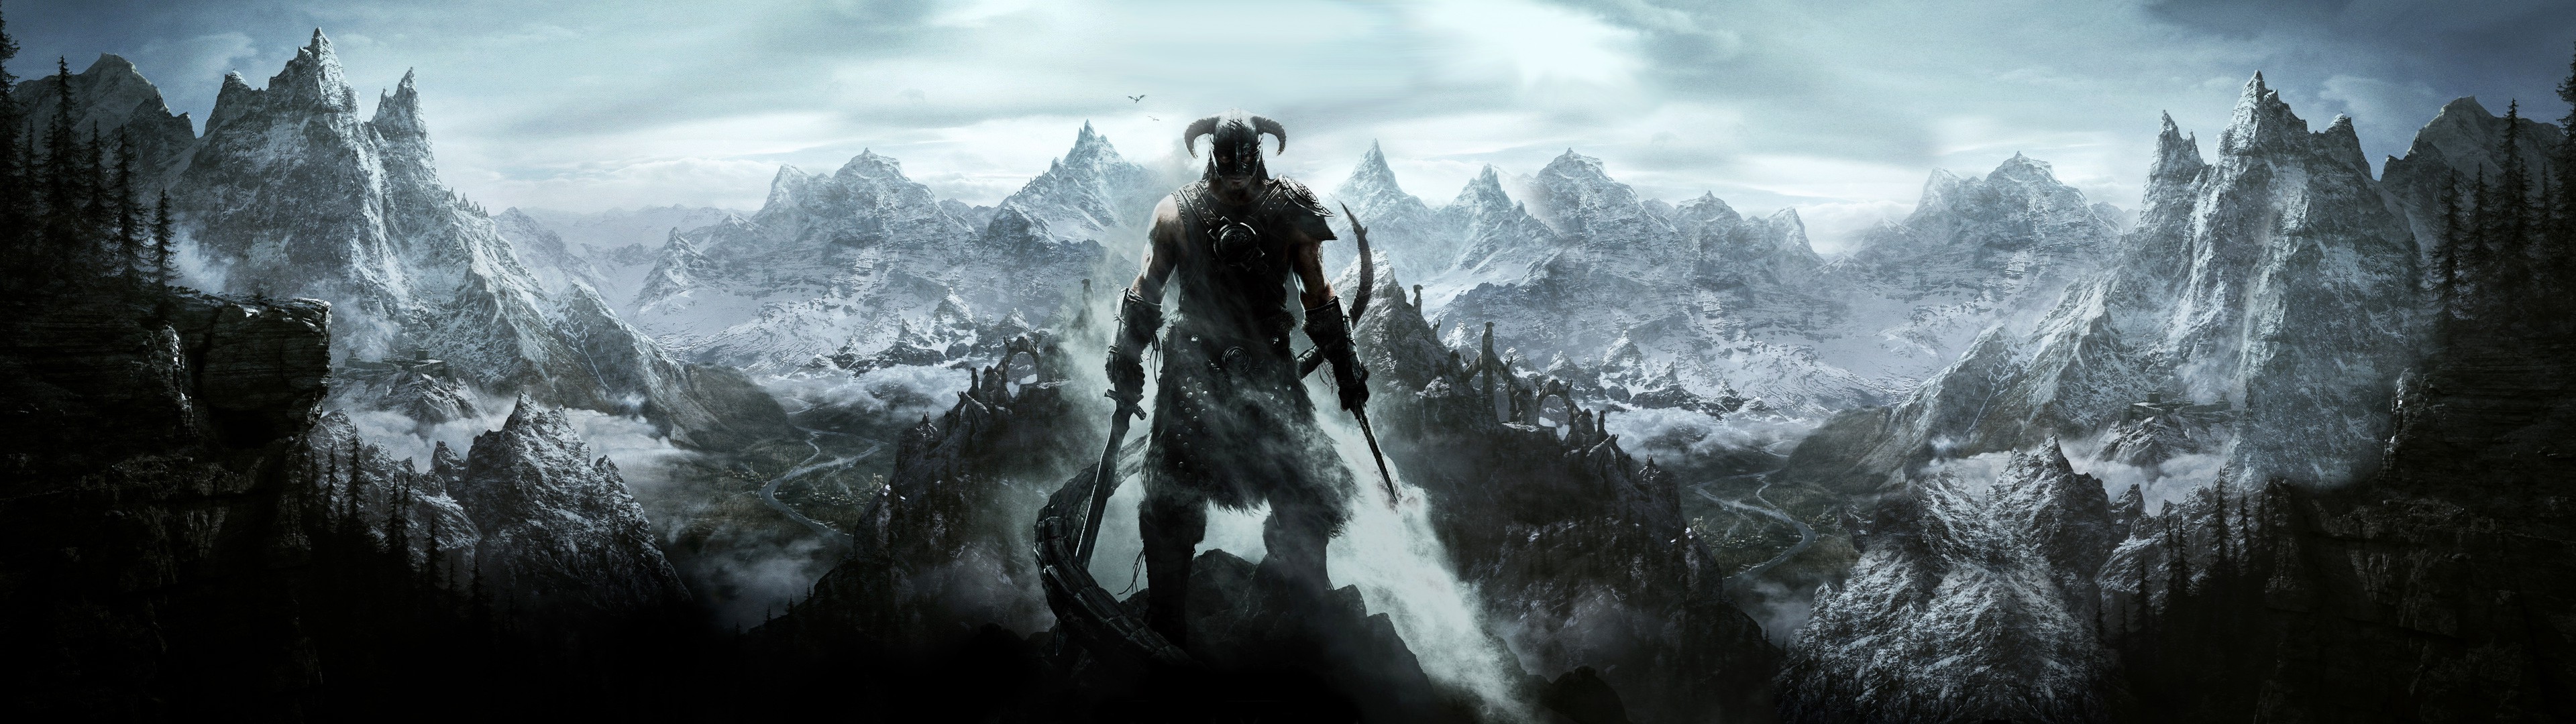 The Elder Scrolls V: Skyrim, Mountain, Snow, Fantasy Art, Sword, Video Games, Landscape Wallpaper